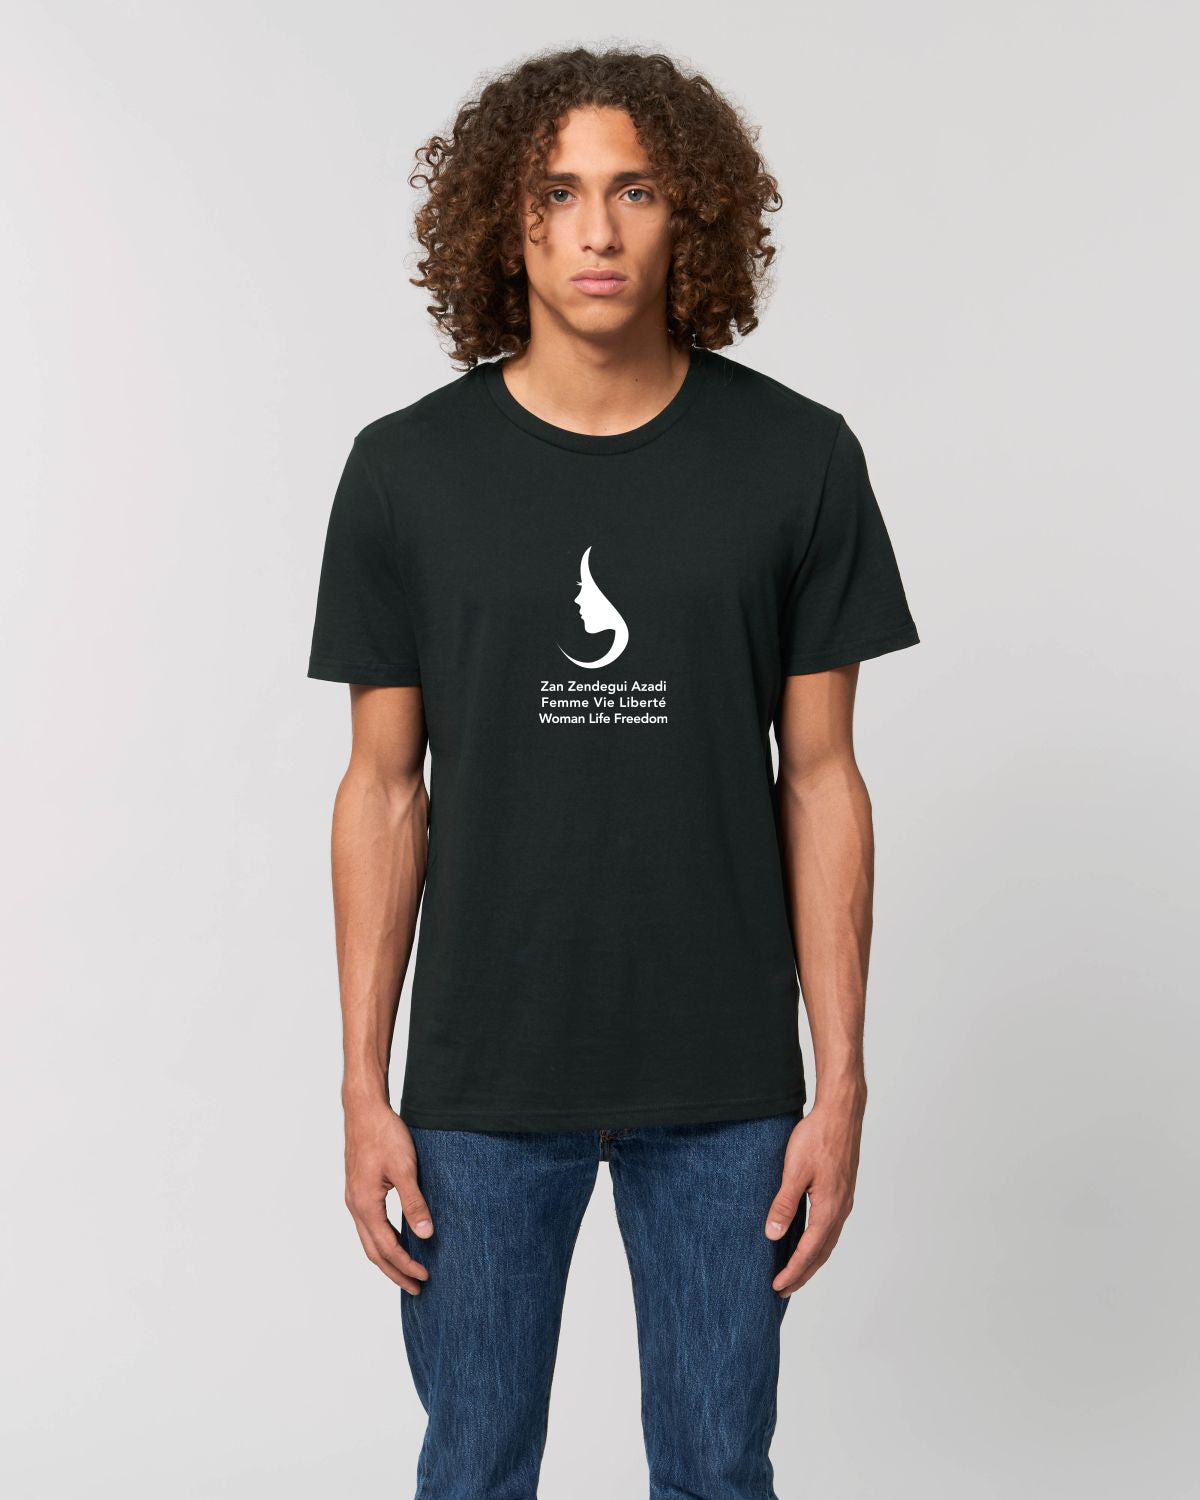 T -Shirt "Frau Life Liberty" - Unisex